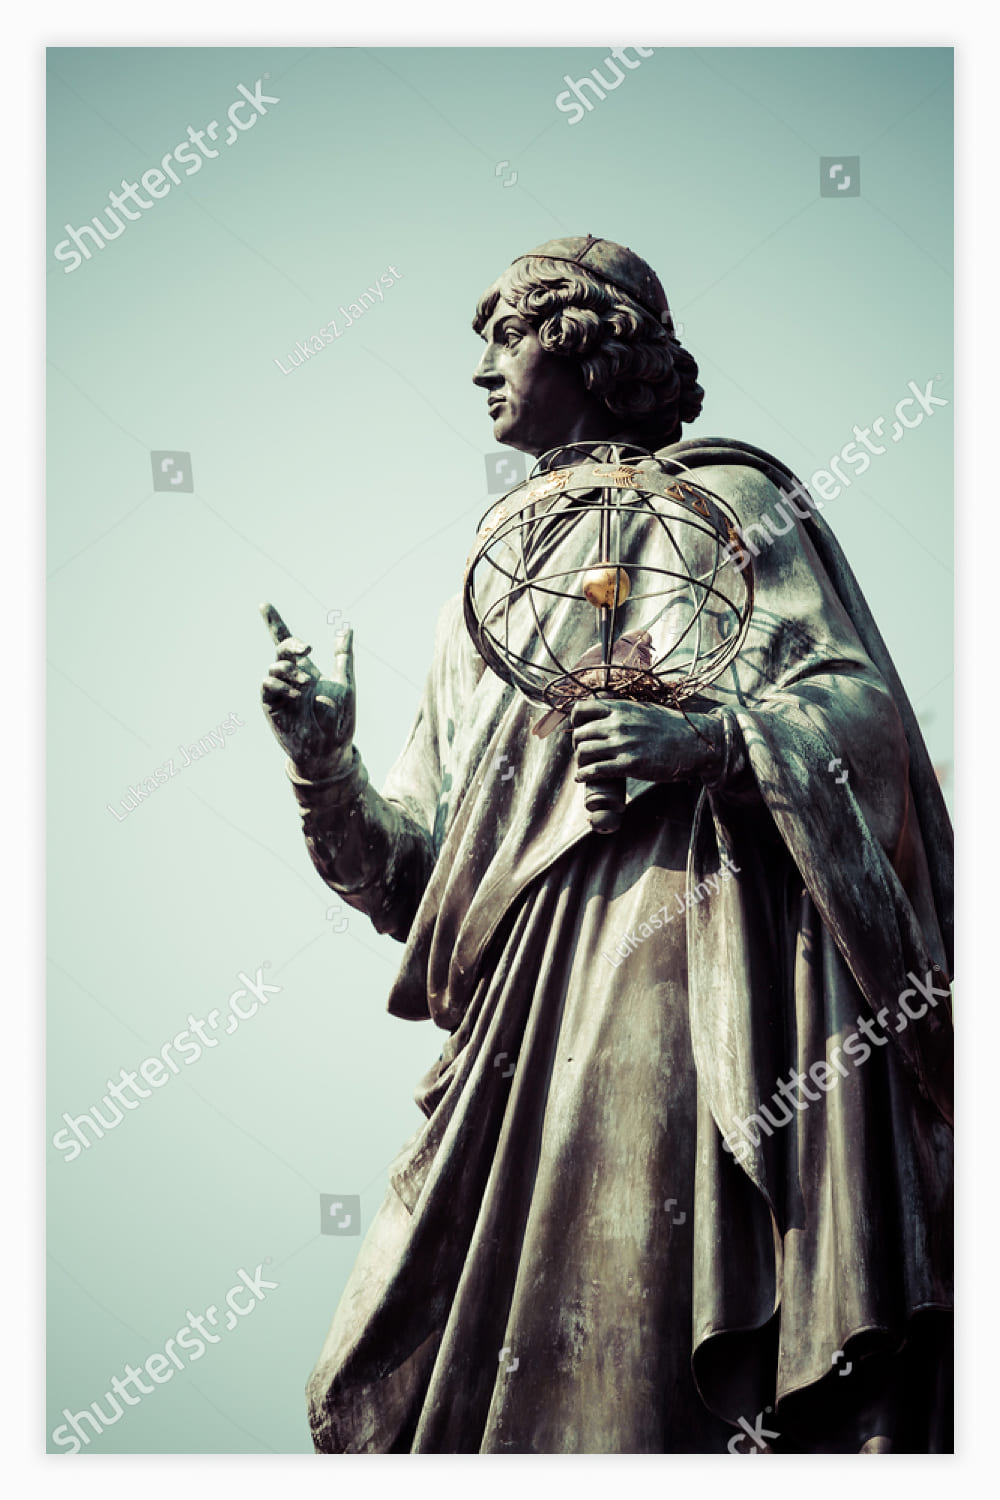 Statue of a man holding a wheel by Aldus Manutius.